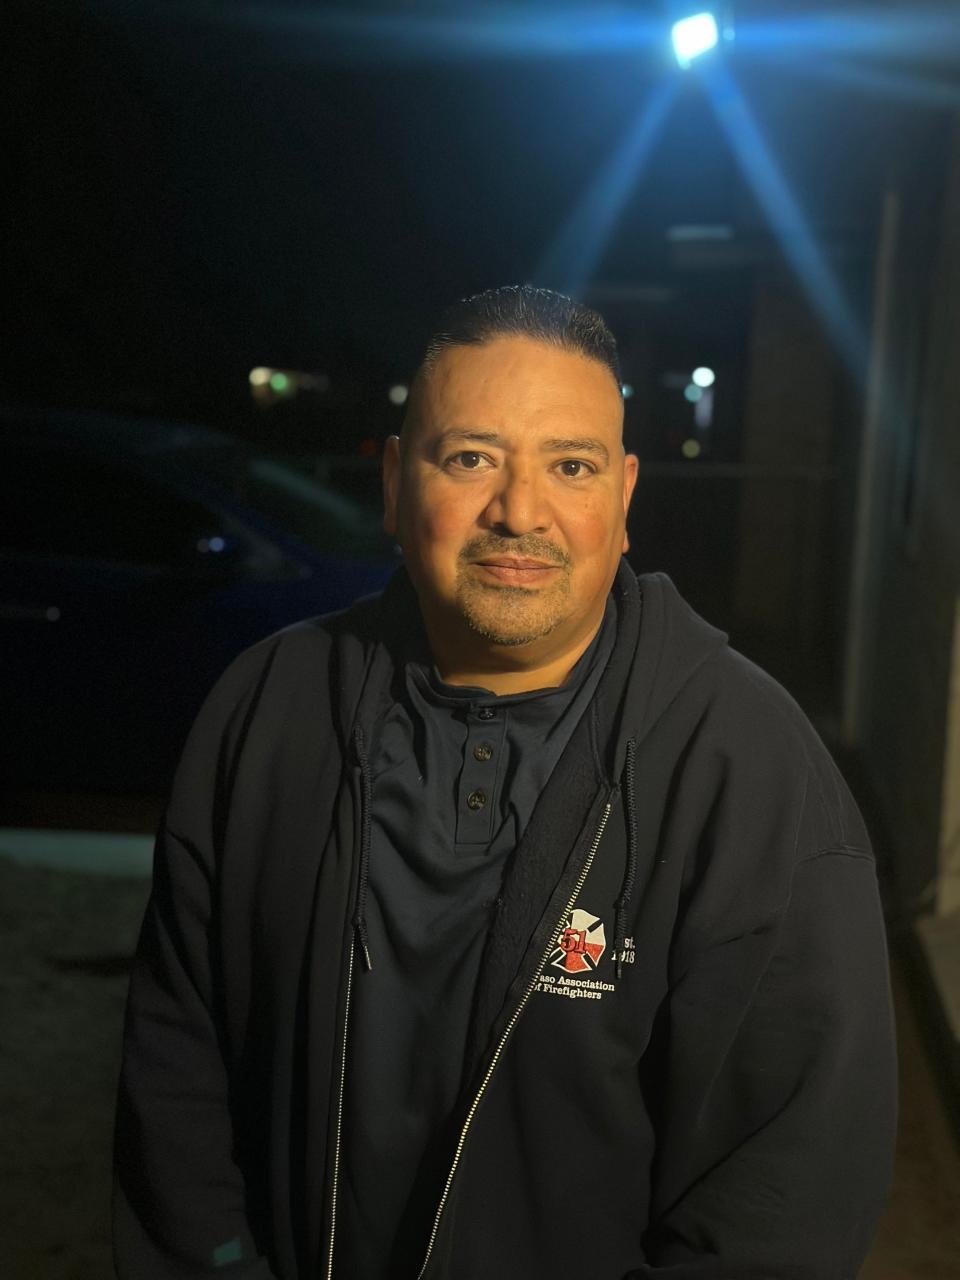 Jose Sariñana is 24-year veteran firefighter for the El Paso Fire Department.